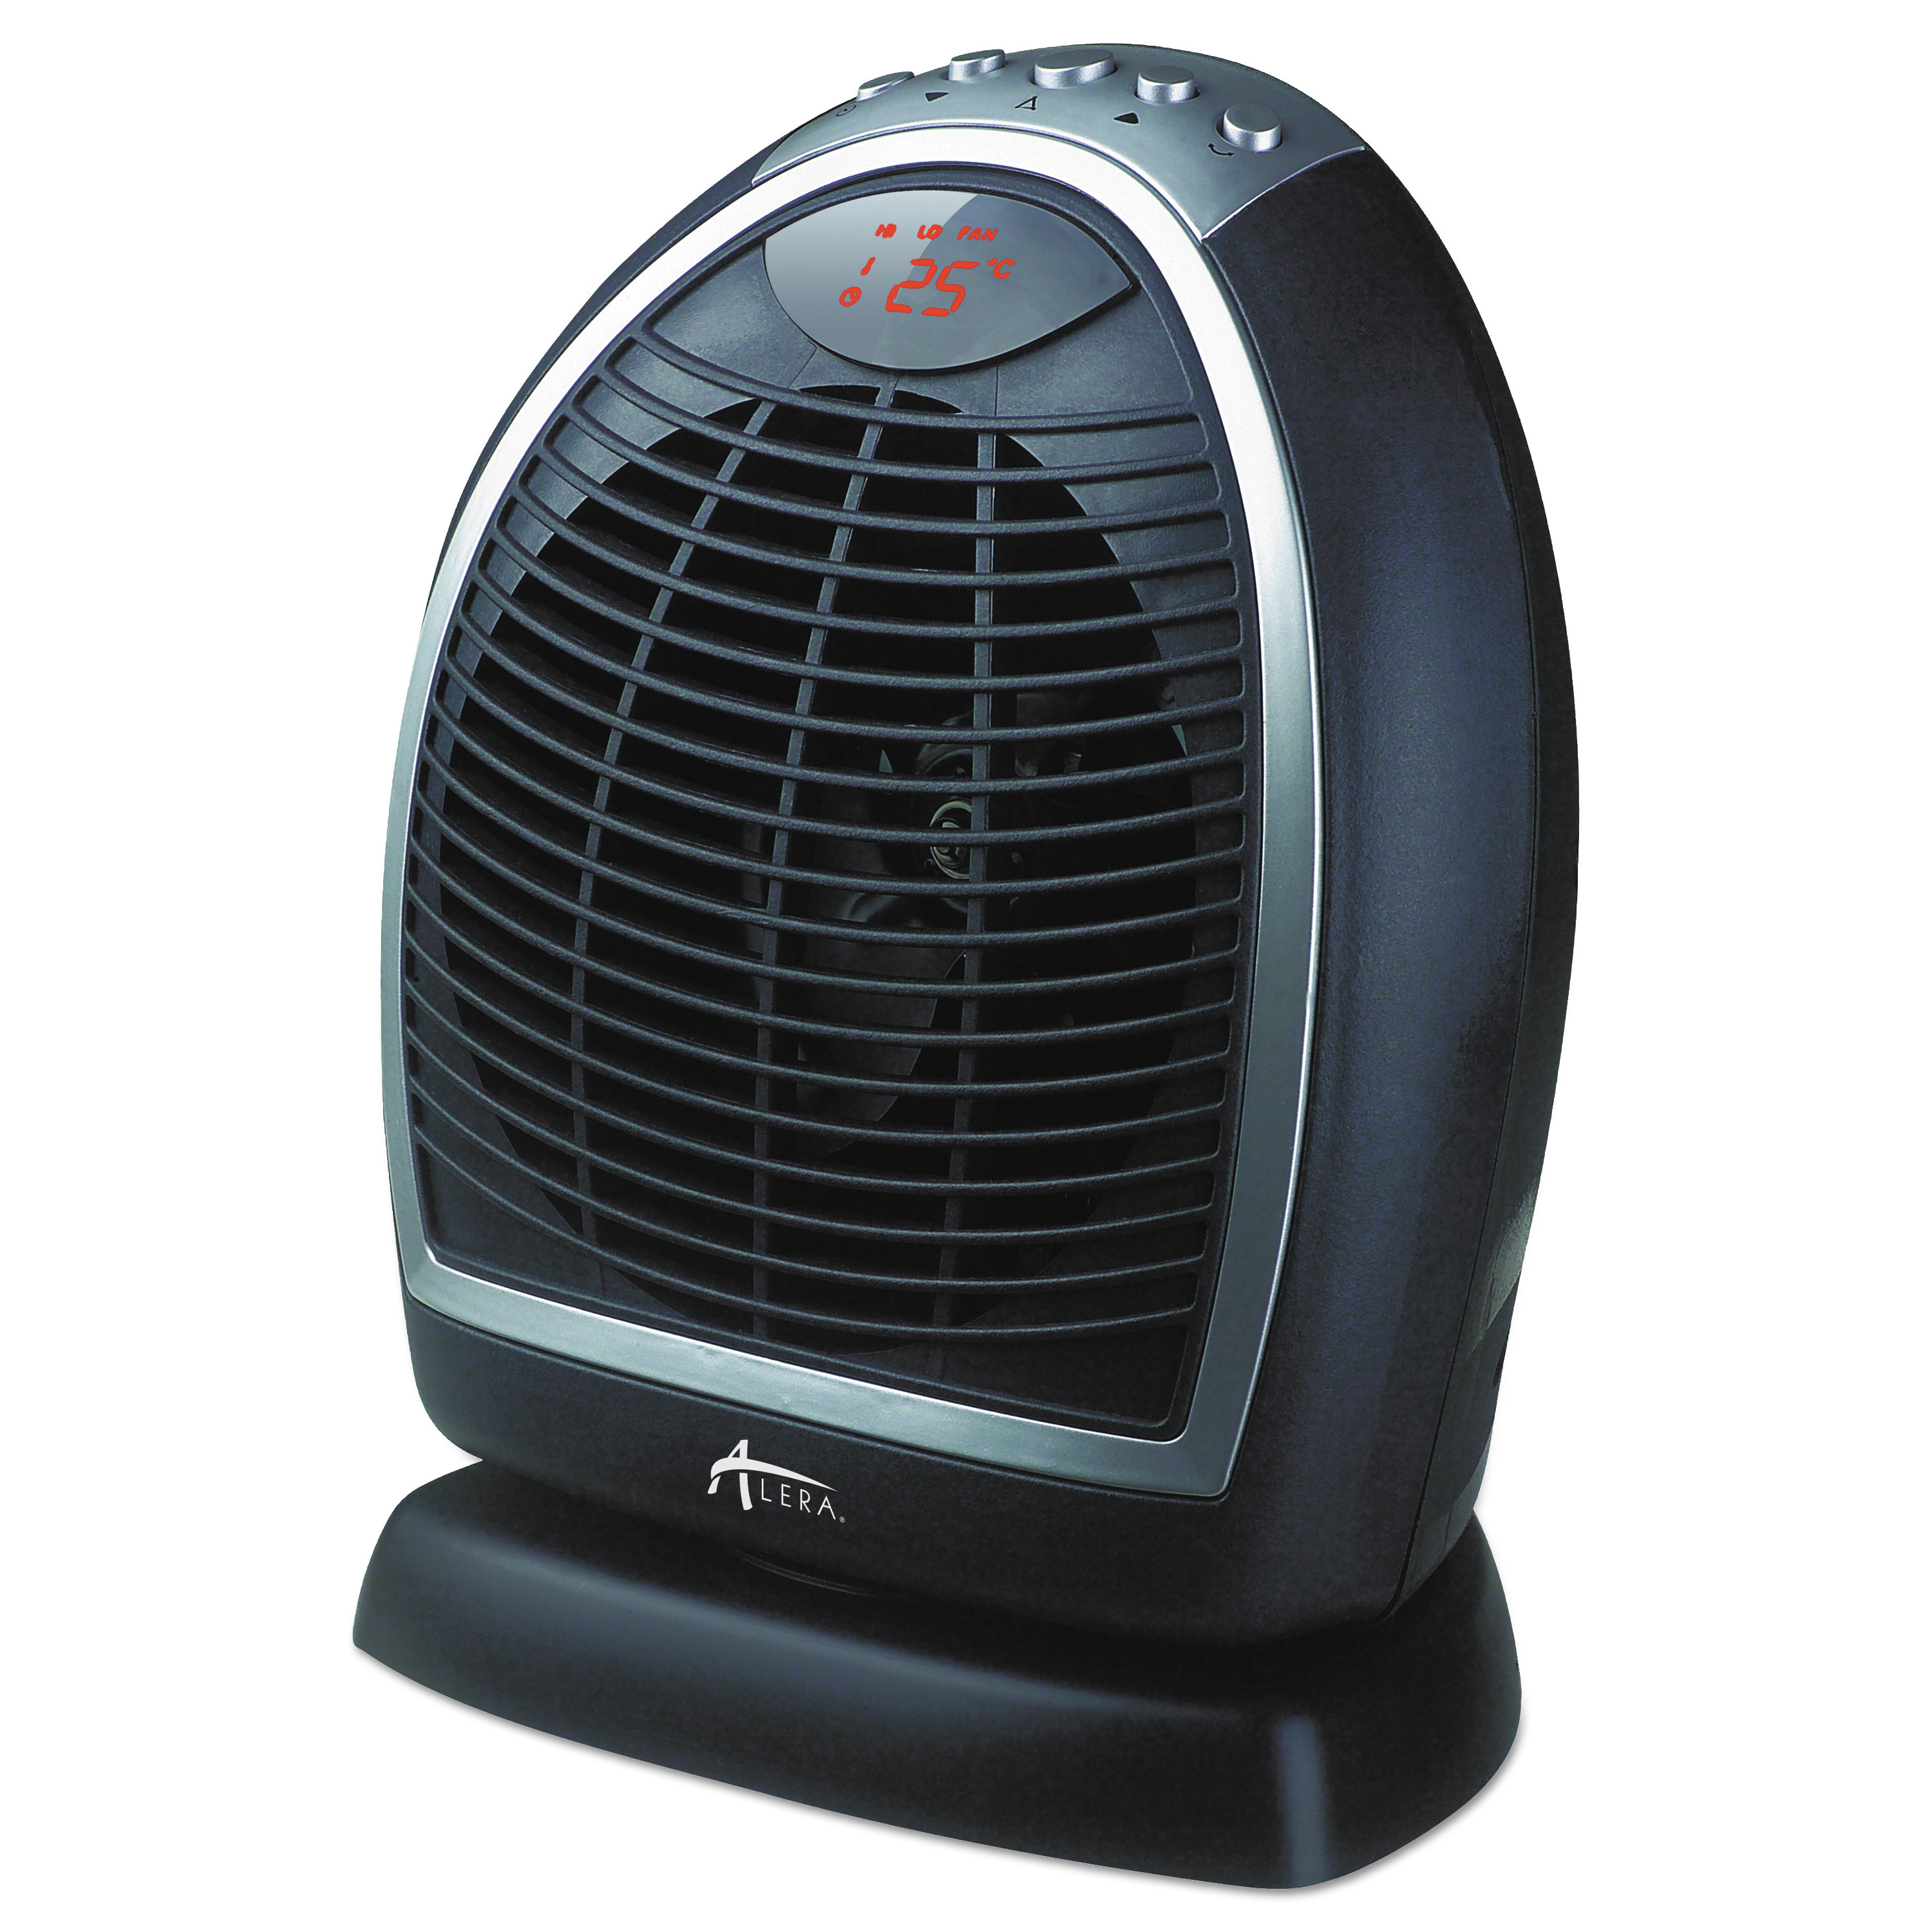  Alera HEFF12B Digital Fan-Forced Oscillating Heater, 1500W, 9 1/4 x 7 x 11 3/4, Black (ALEHEFF12B) 